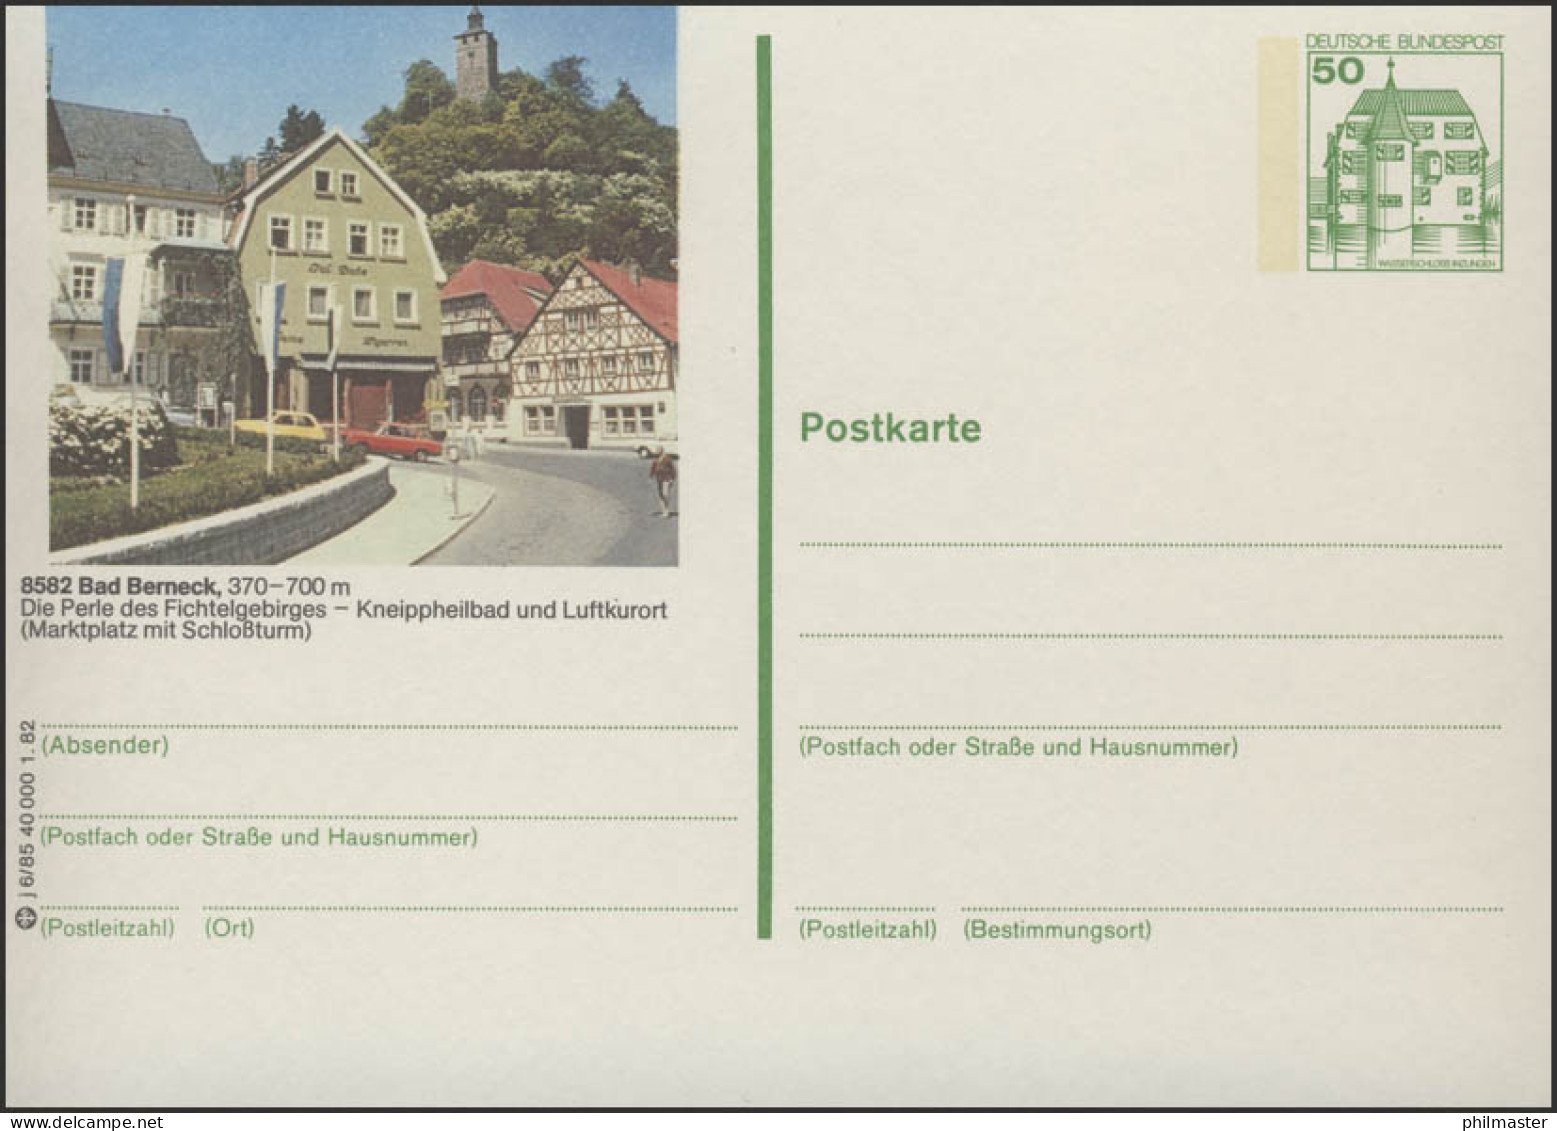 P134-j6/085 8582 Bad Berneck - Marktplatz Schloßturm ** - Bildpostkarten - Ungebraucht